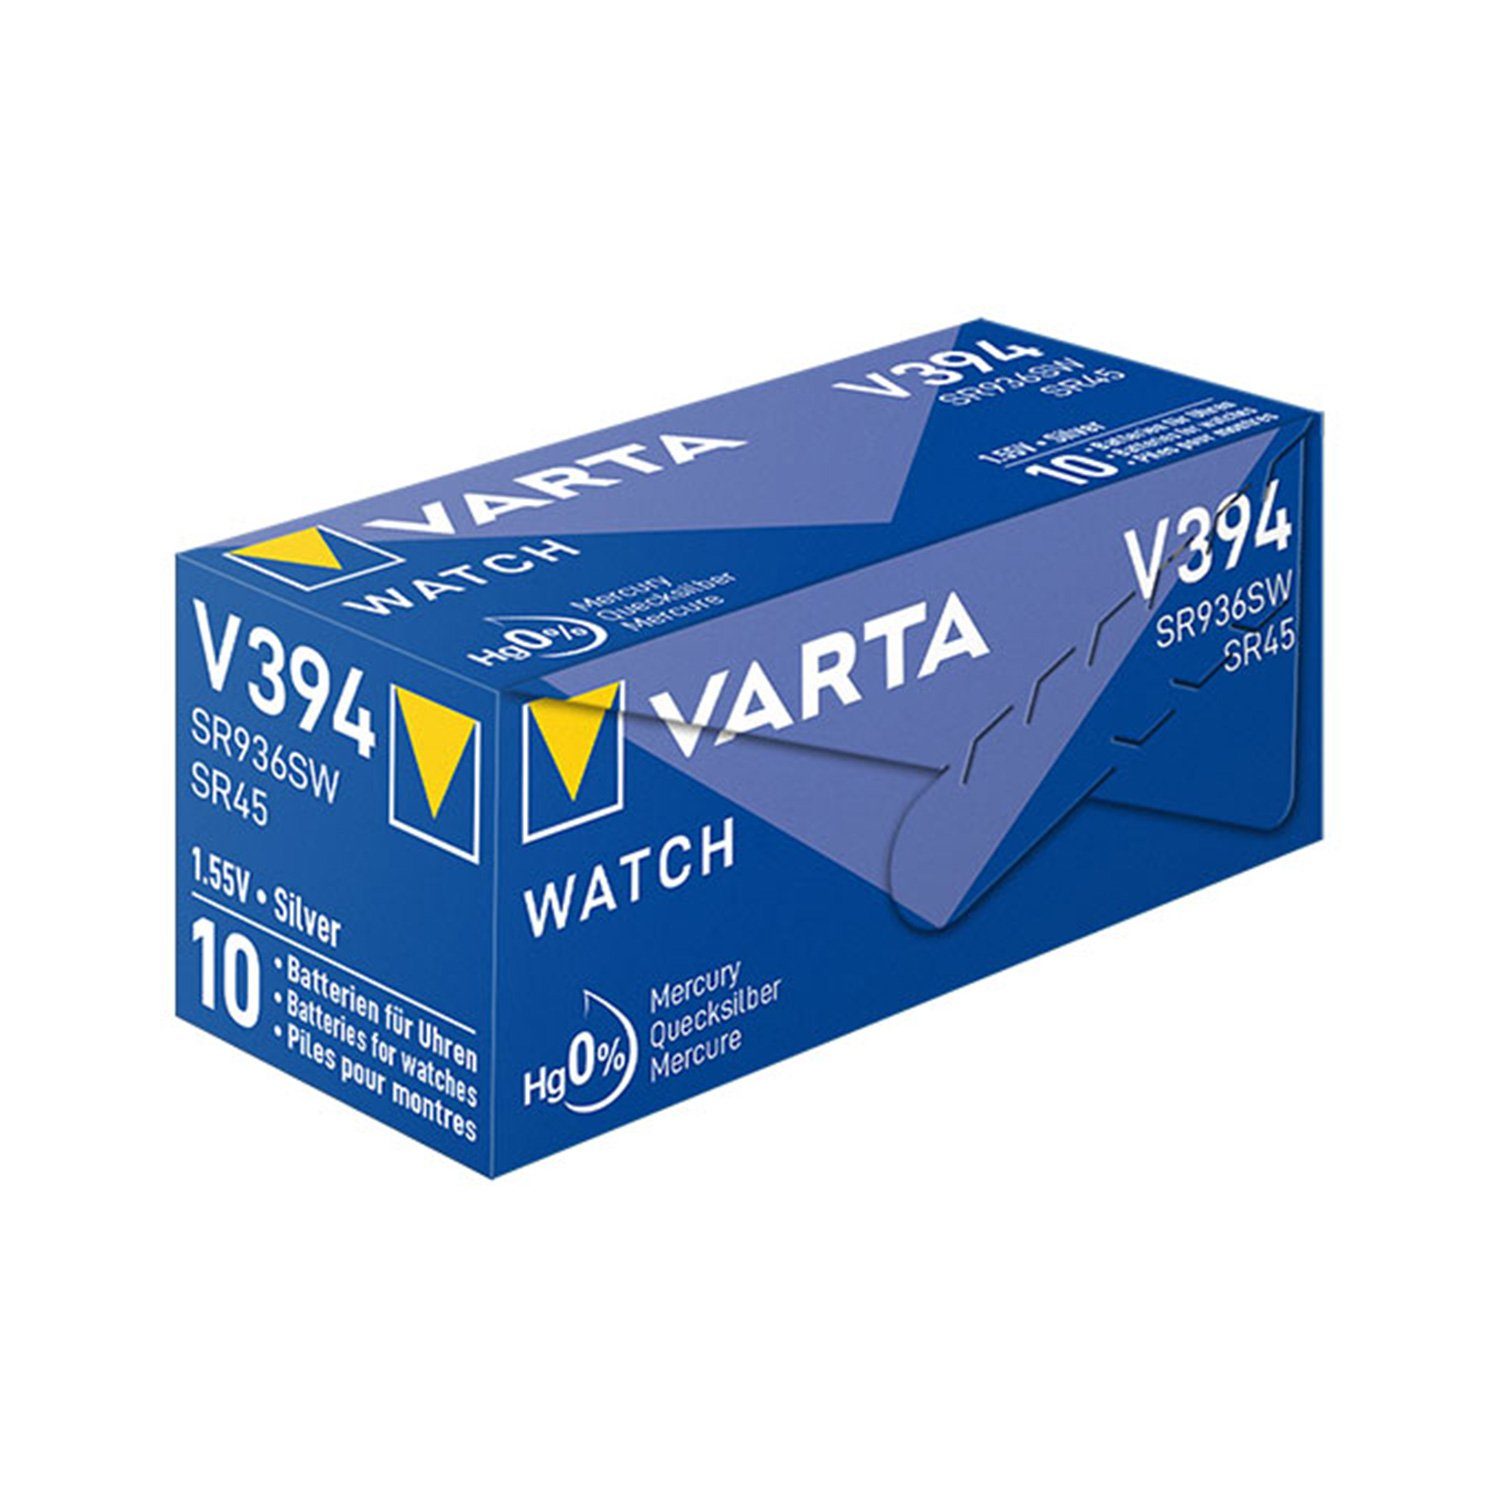 VARTA Varta Batterie 394 Knopfzelle